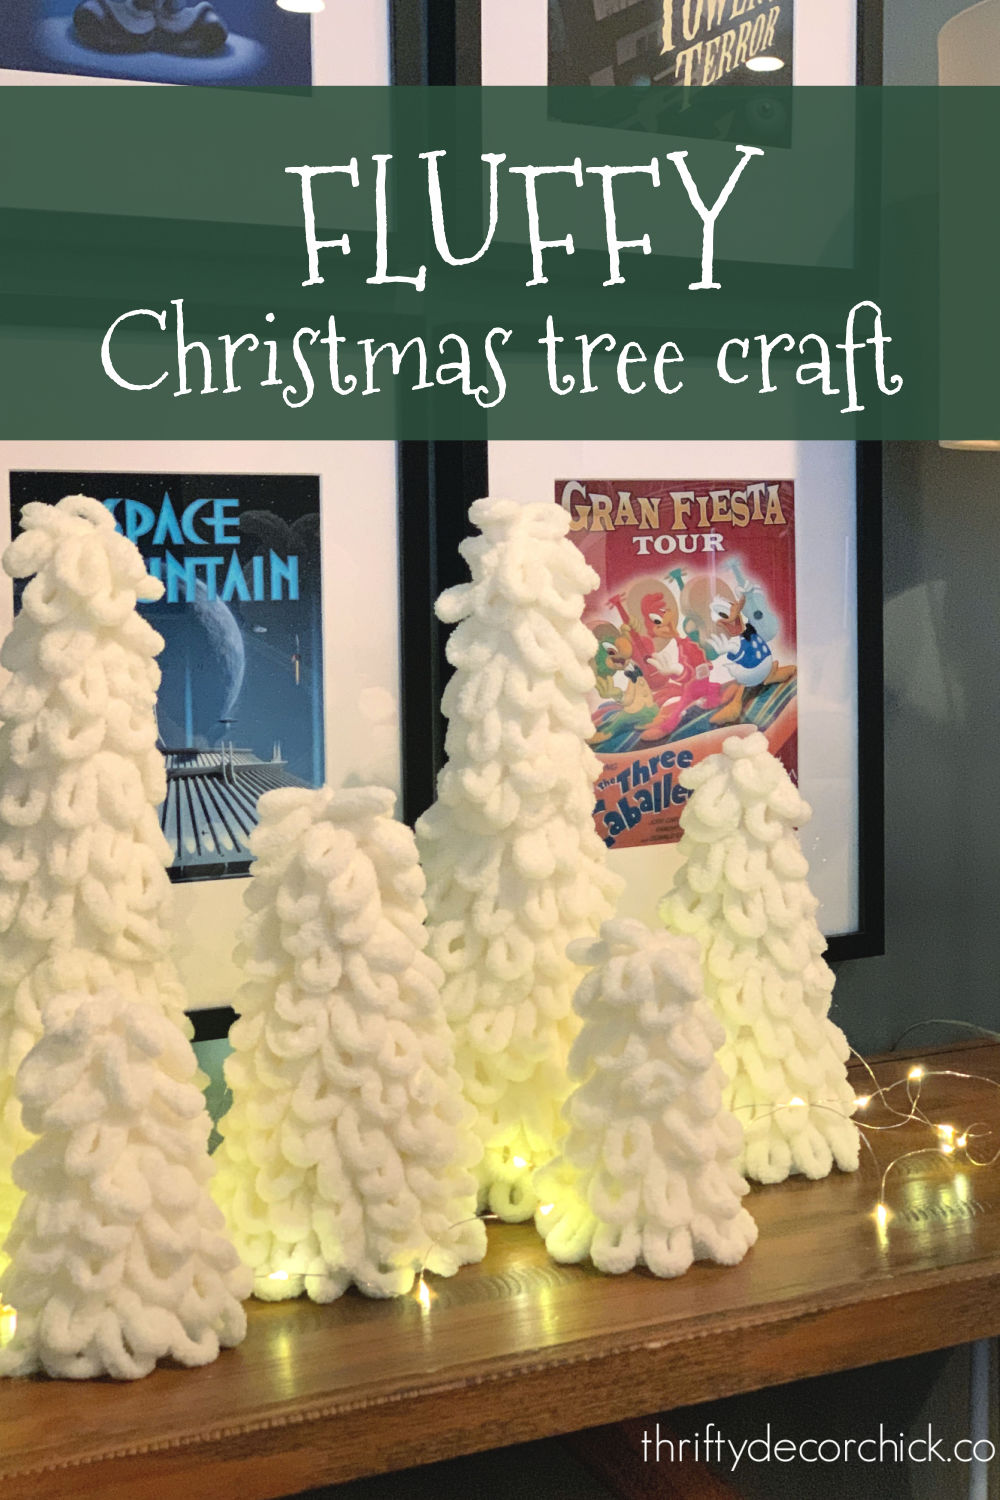 DIY Yarn-Wrapped Christmas Trees - Practical Stewardship